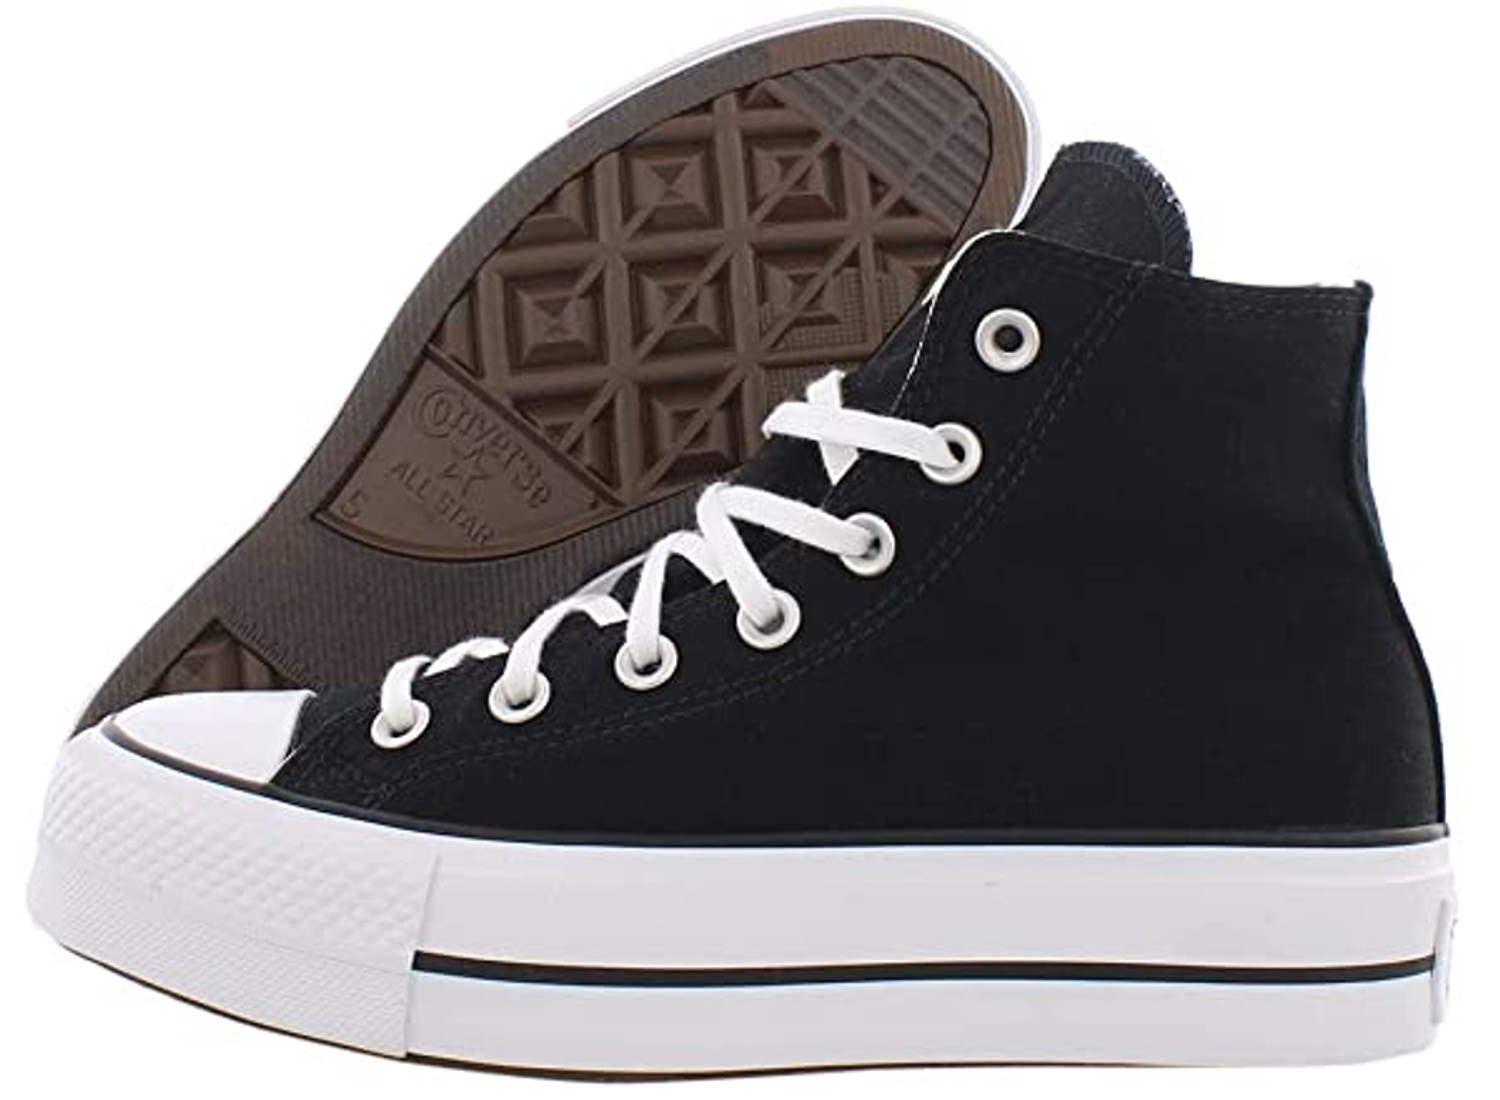 Black converse sneaker